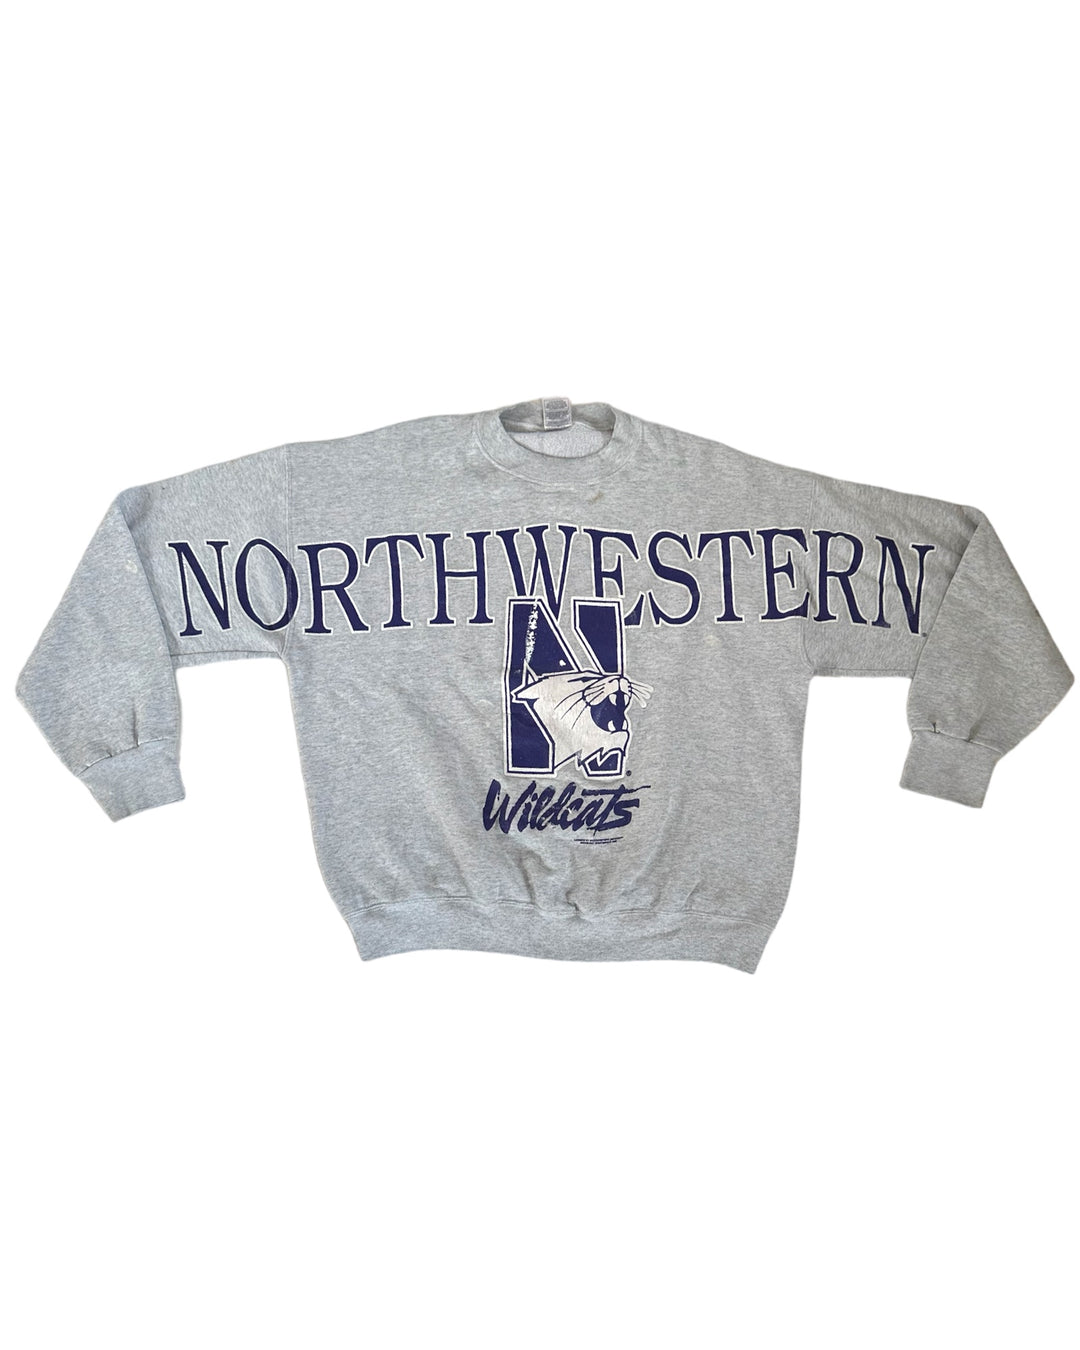 Northwestern Vintage Sweatshirt